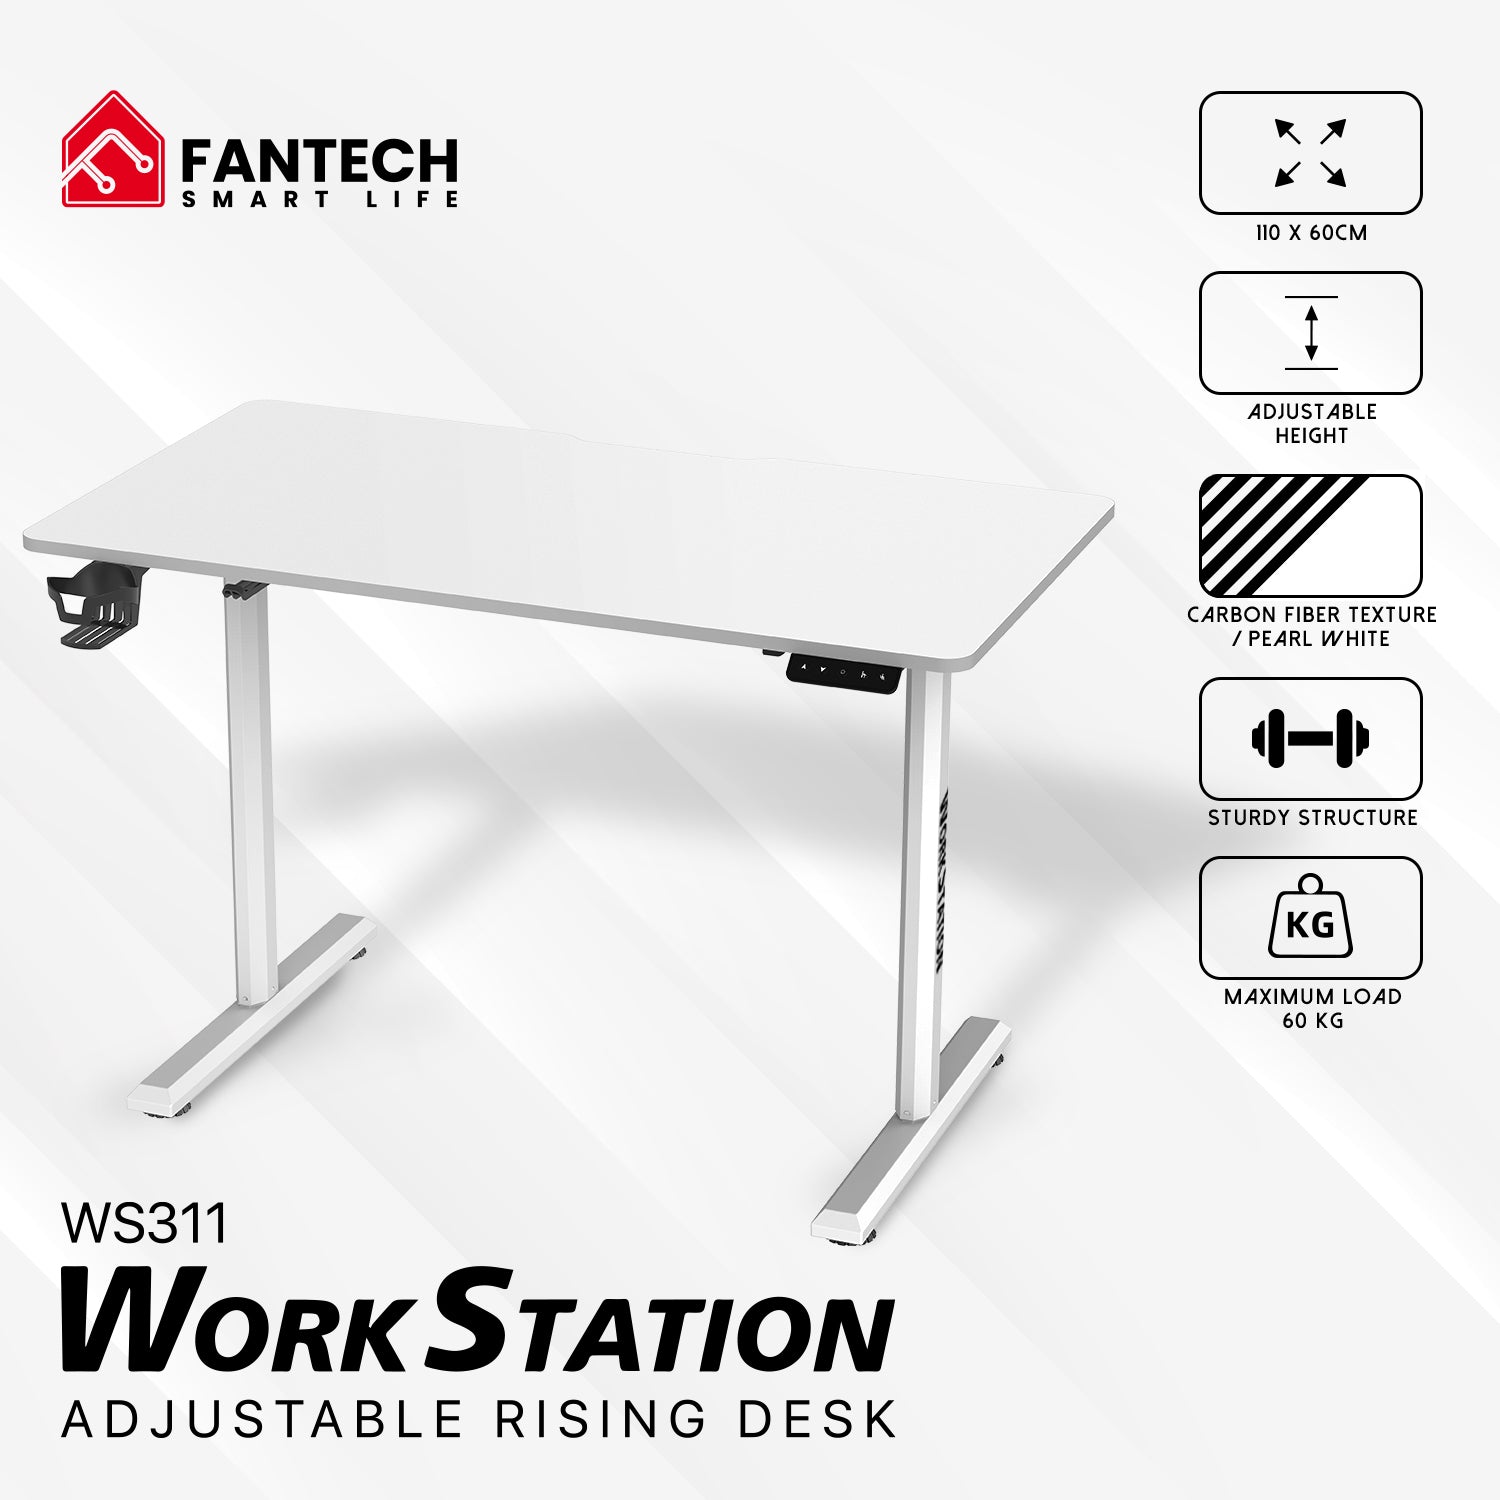 Fantech WS311 Work Station Adjustable Rising Desk Desk & Chair 130 JOD